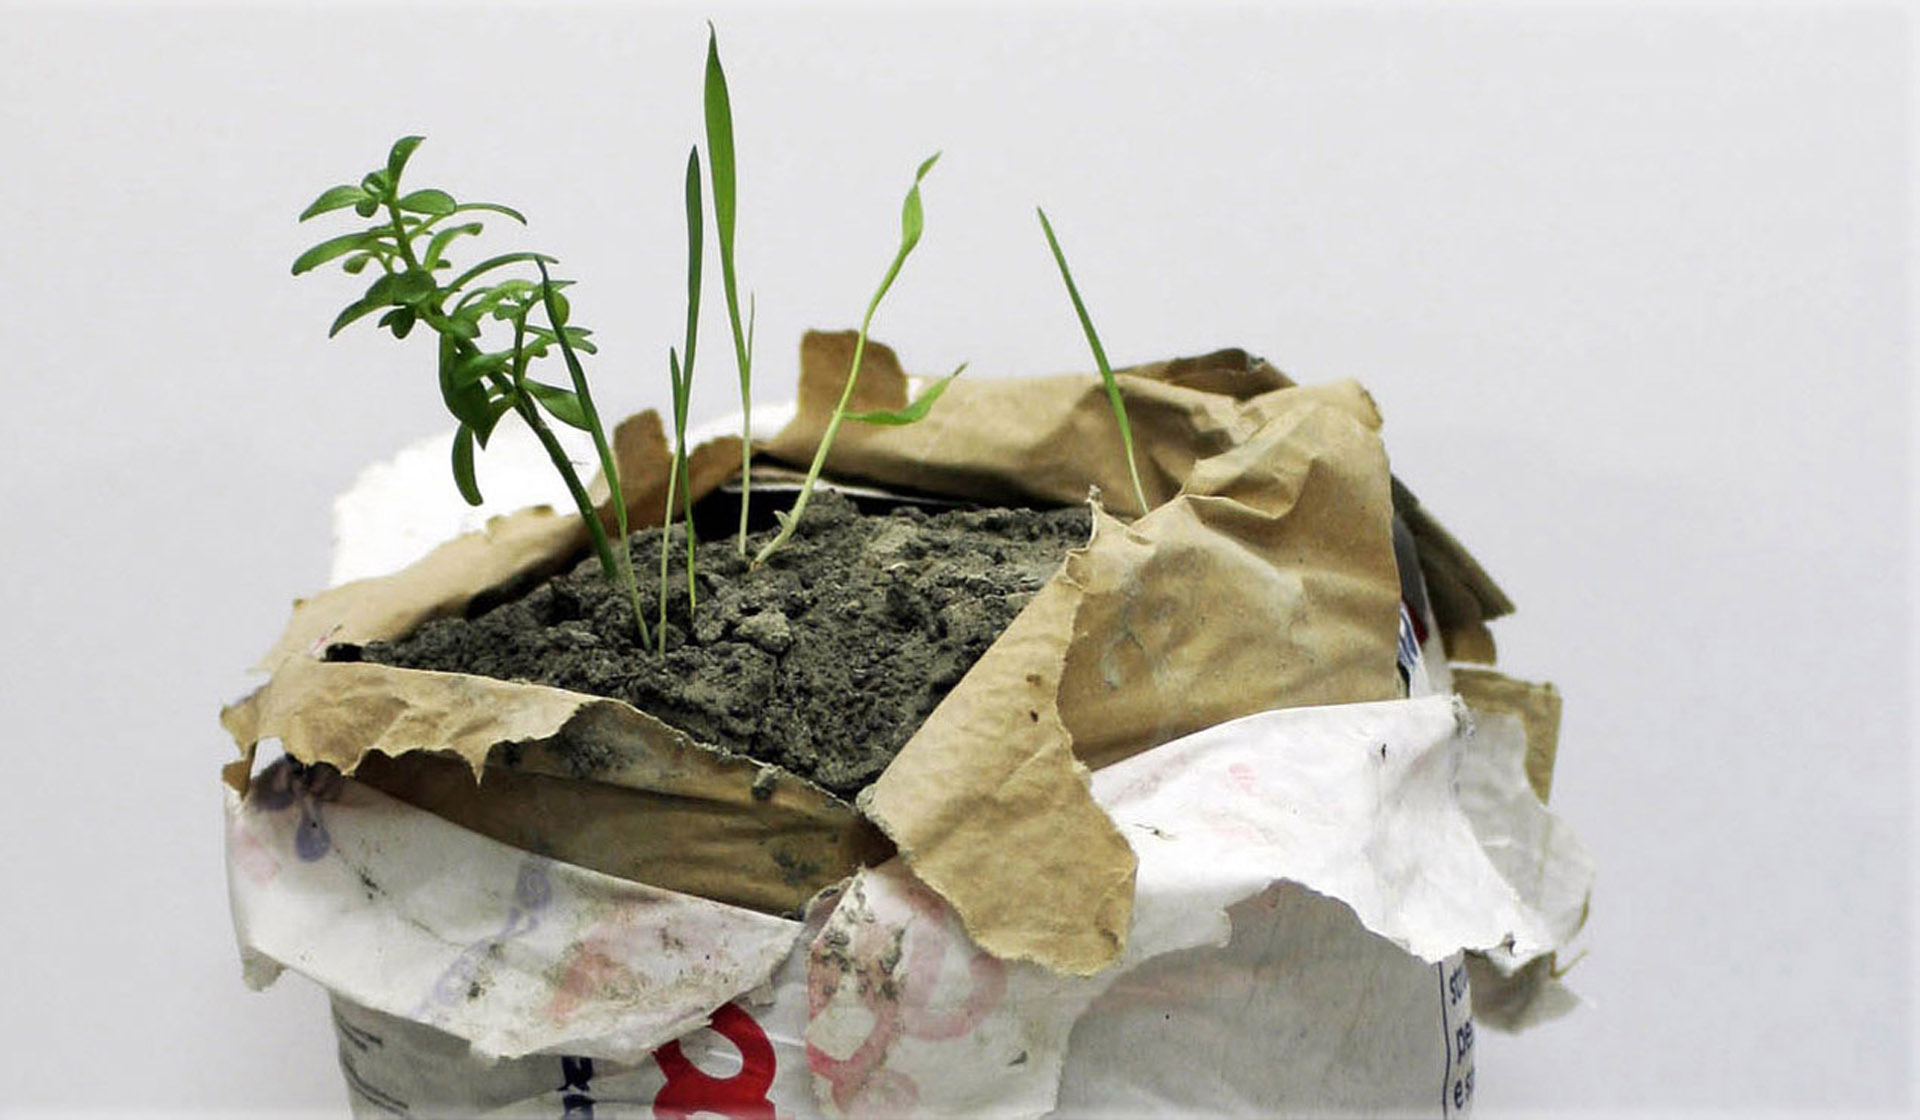 DETAIL: Performance of a plant - 2013, concrete bag and spontaneous plant